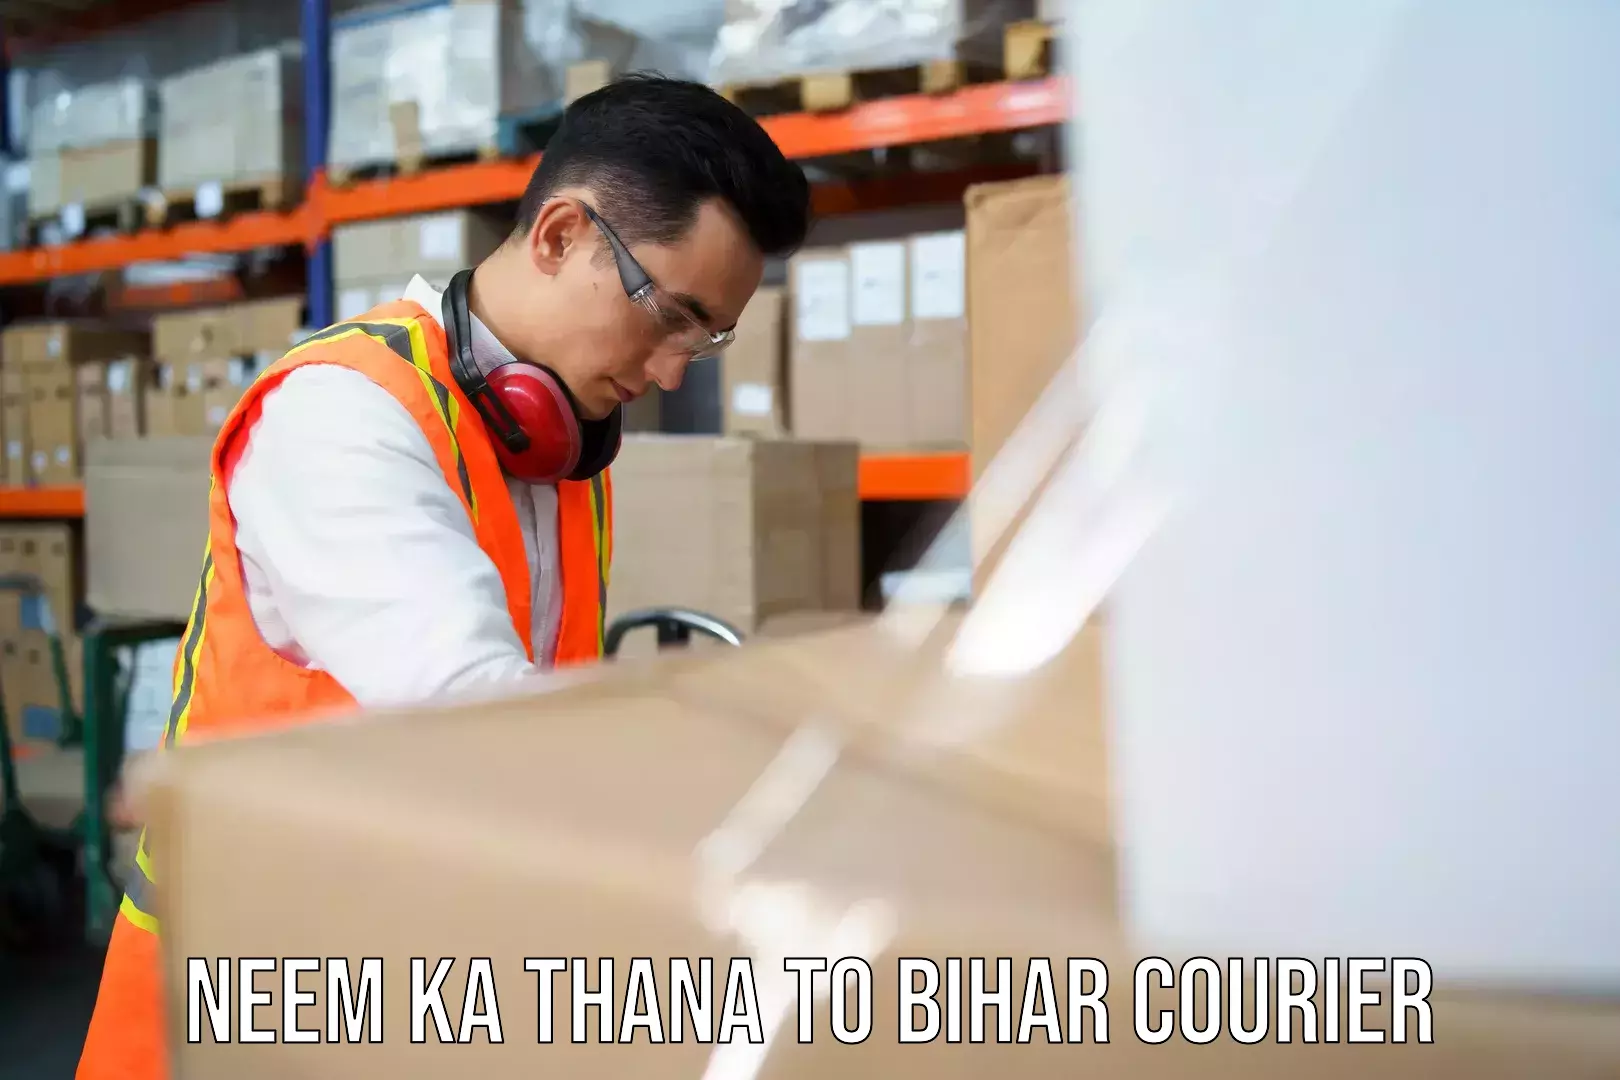 24-hour courier service Neem ka Thana to Bhorey